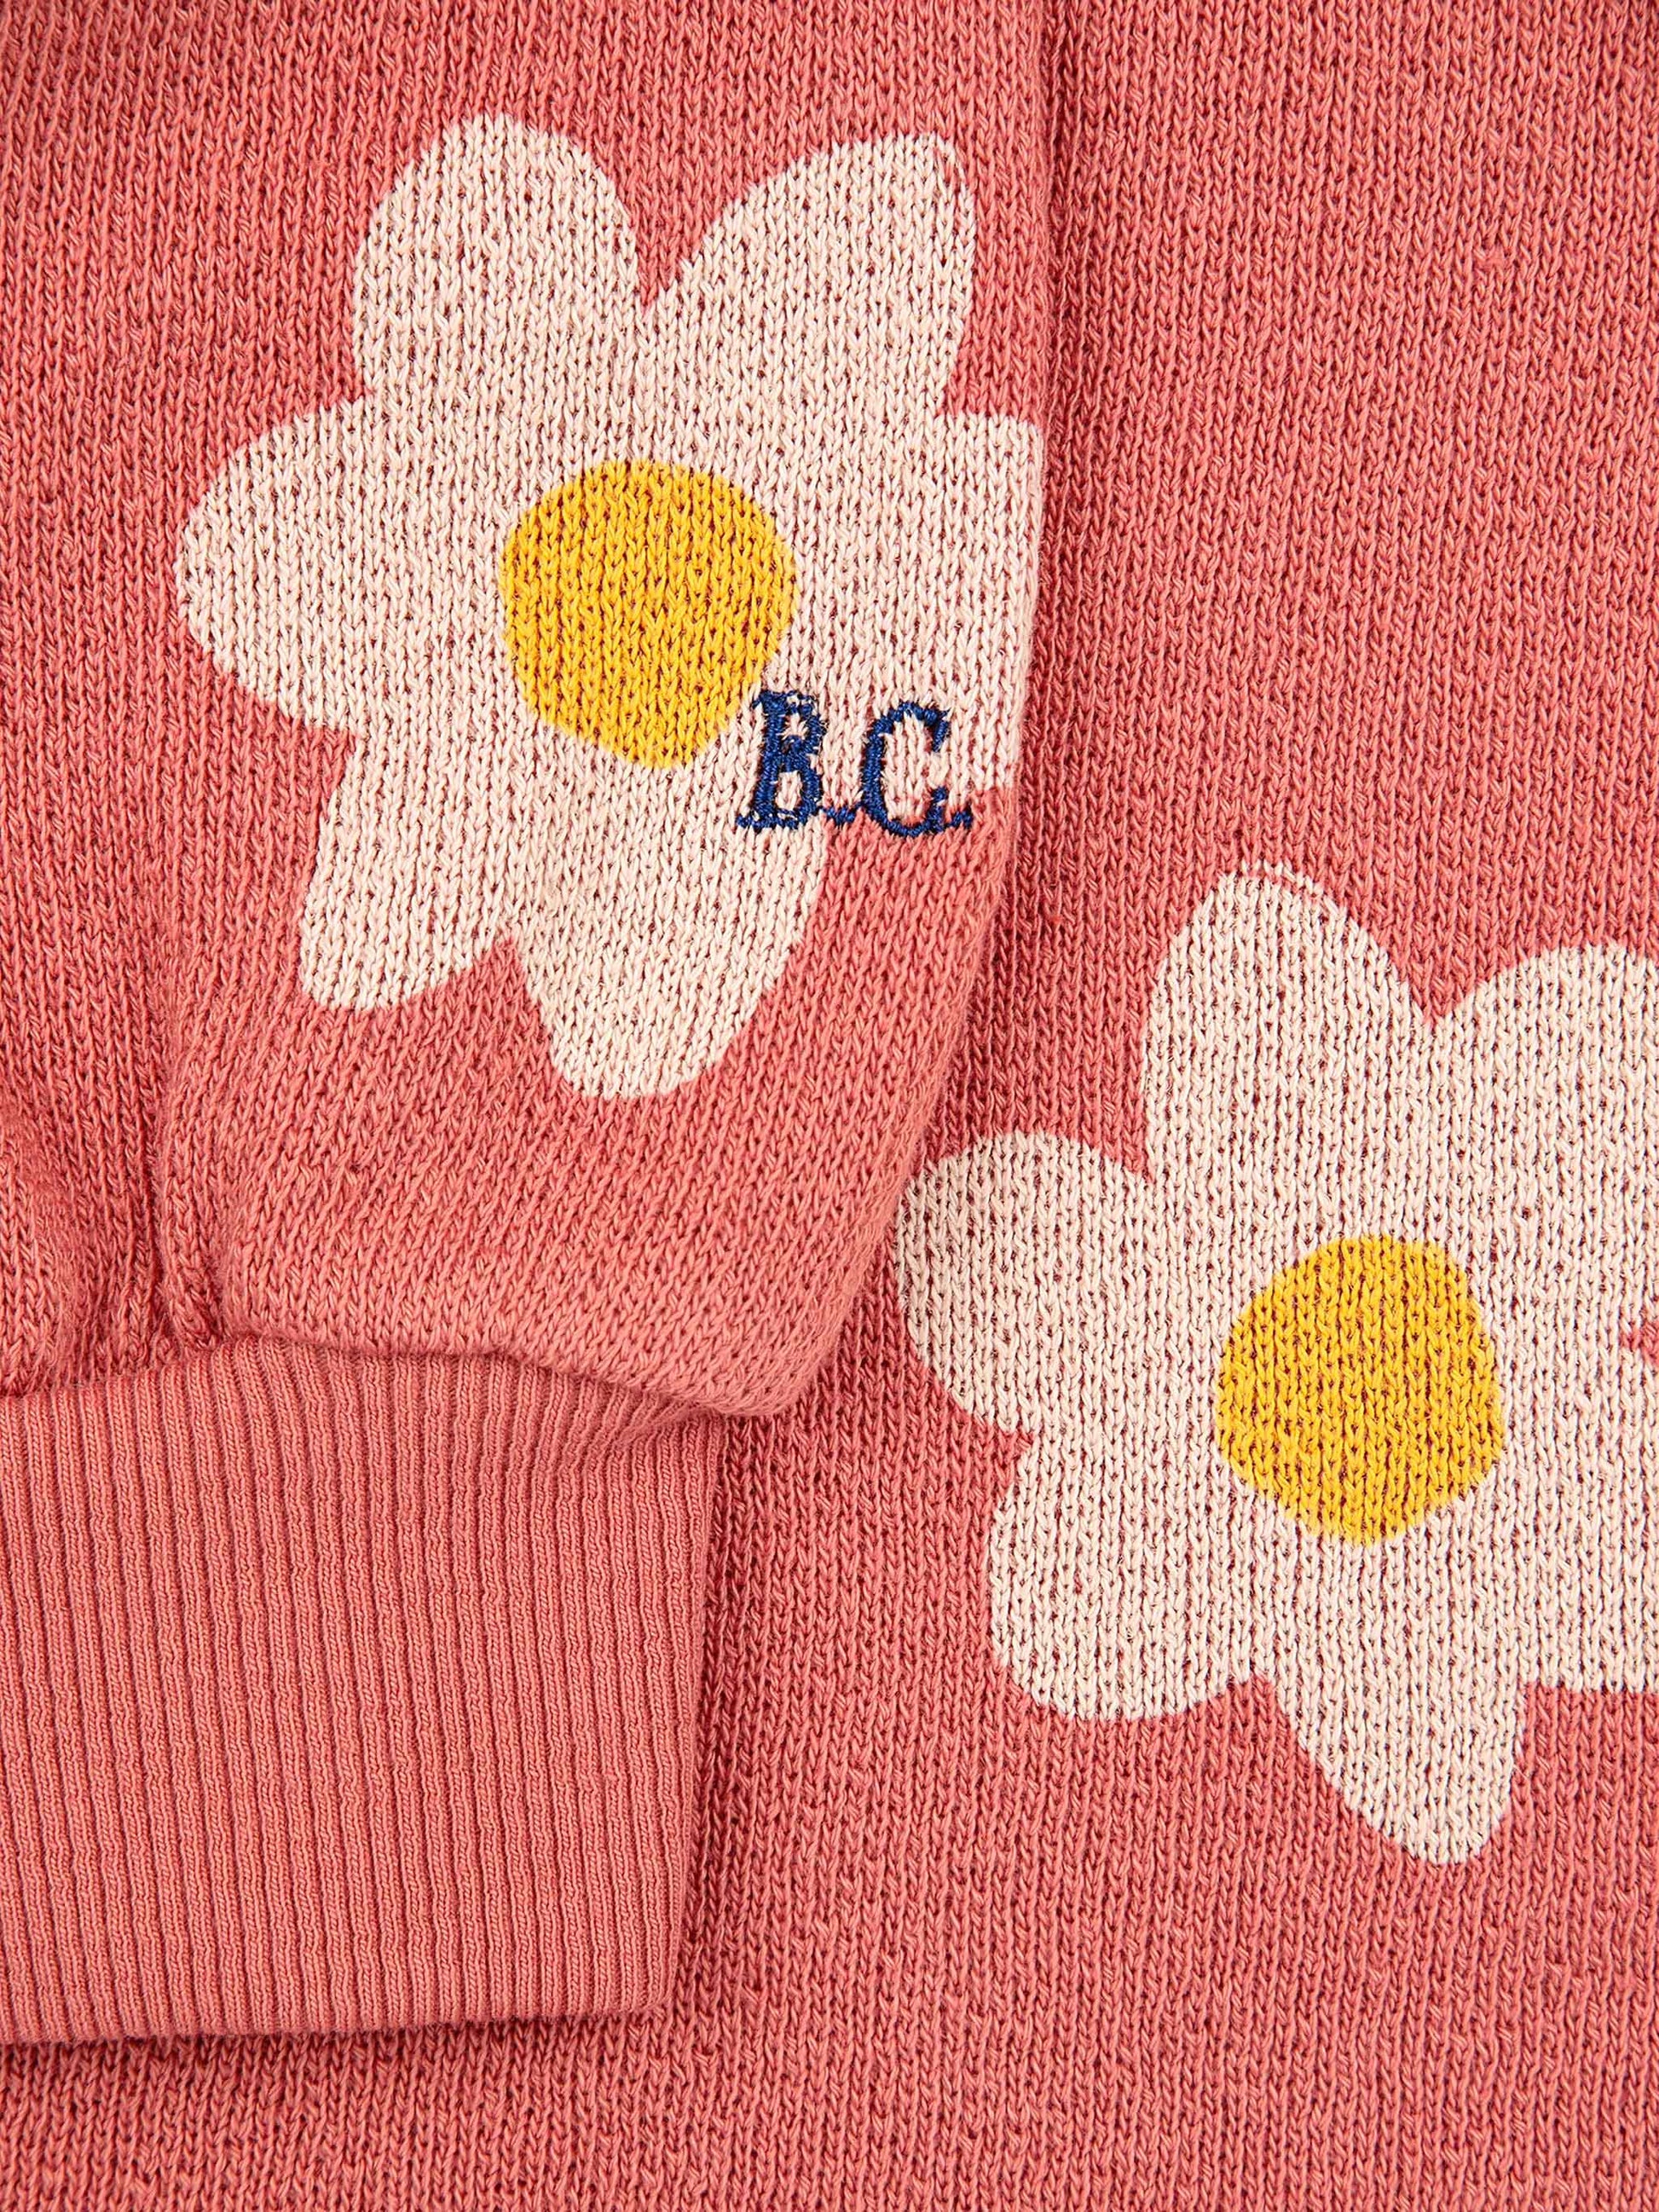 Big – Bobo Flower sweatshirt all Choses over